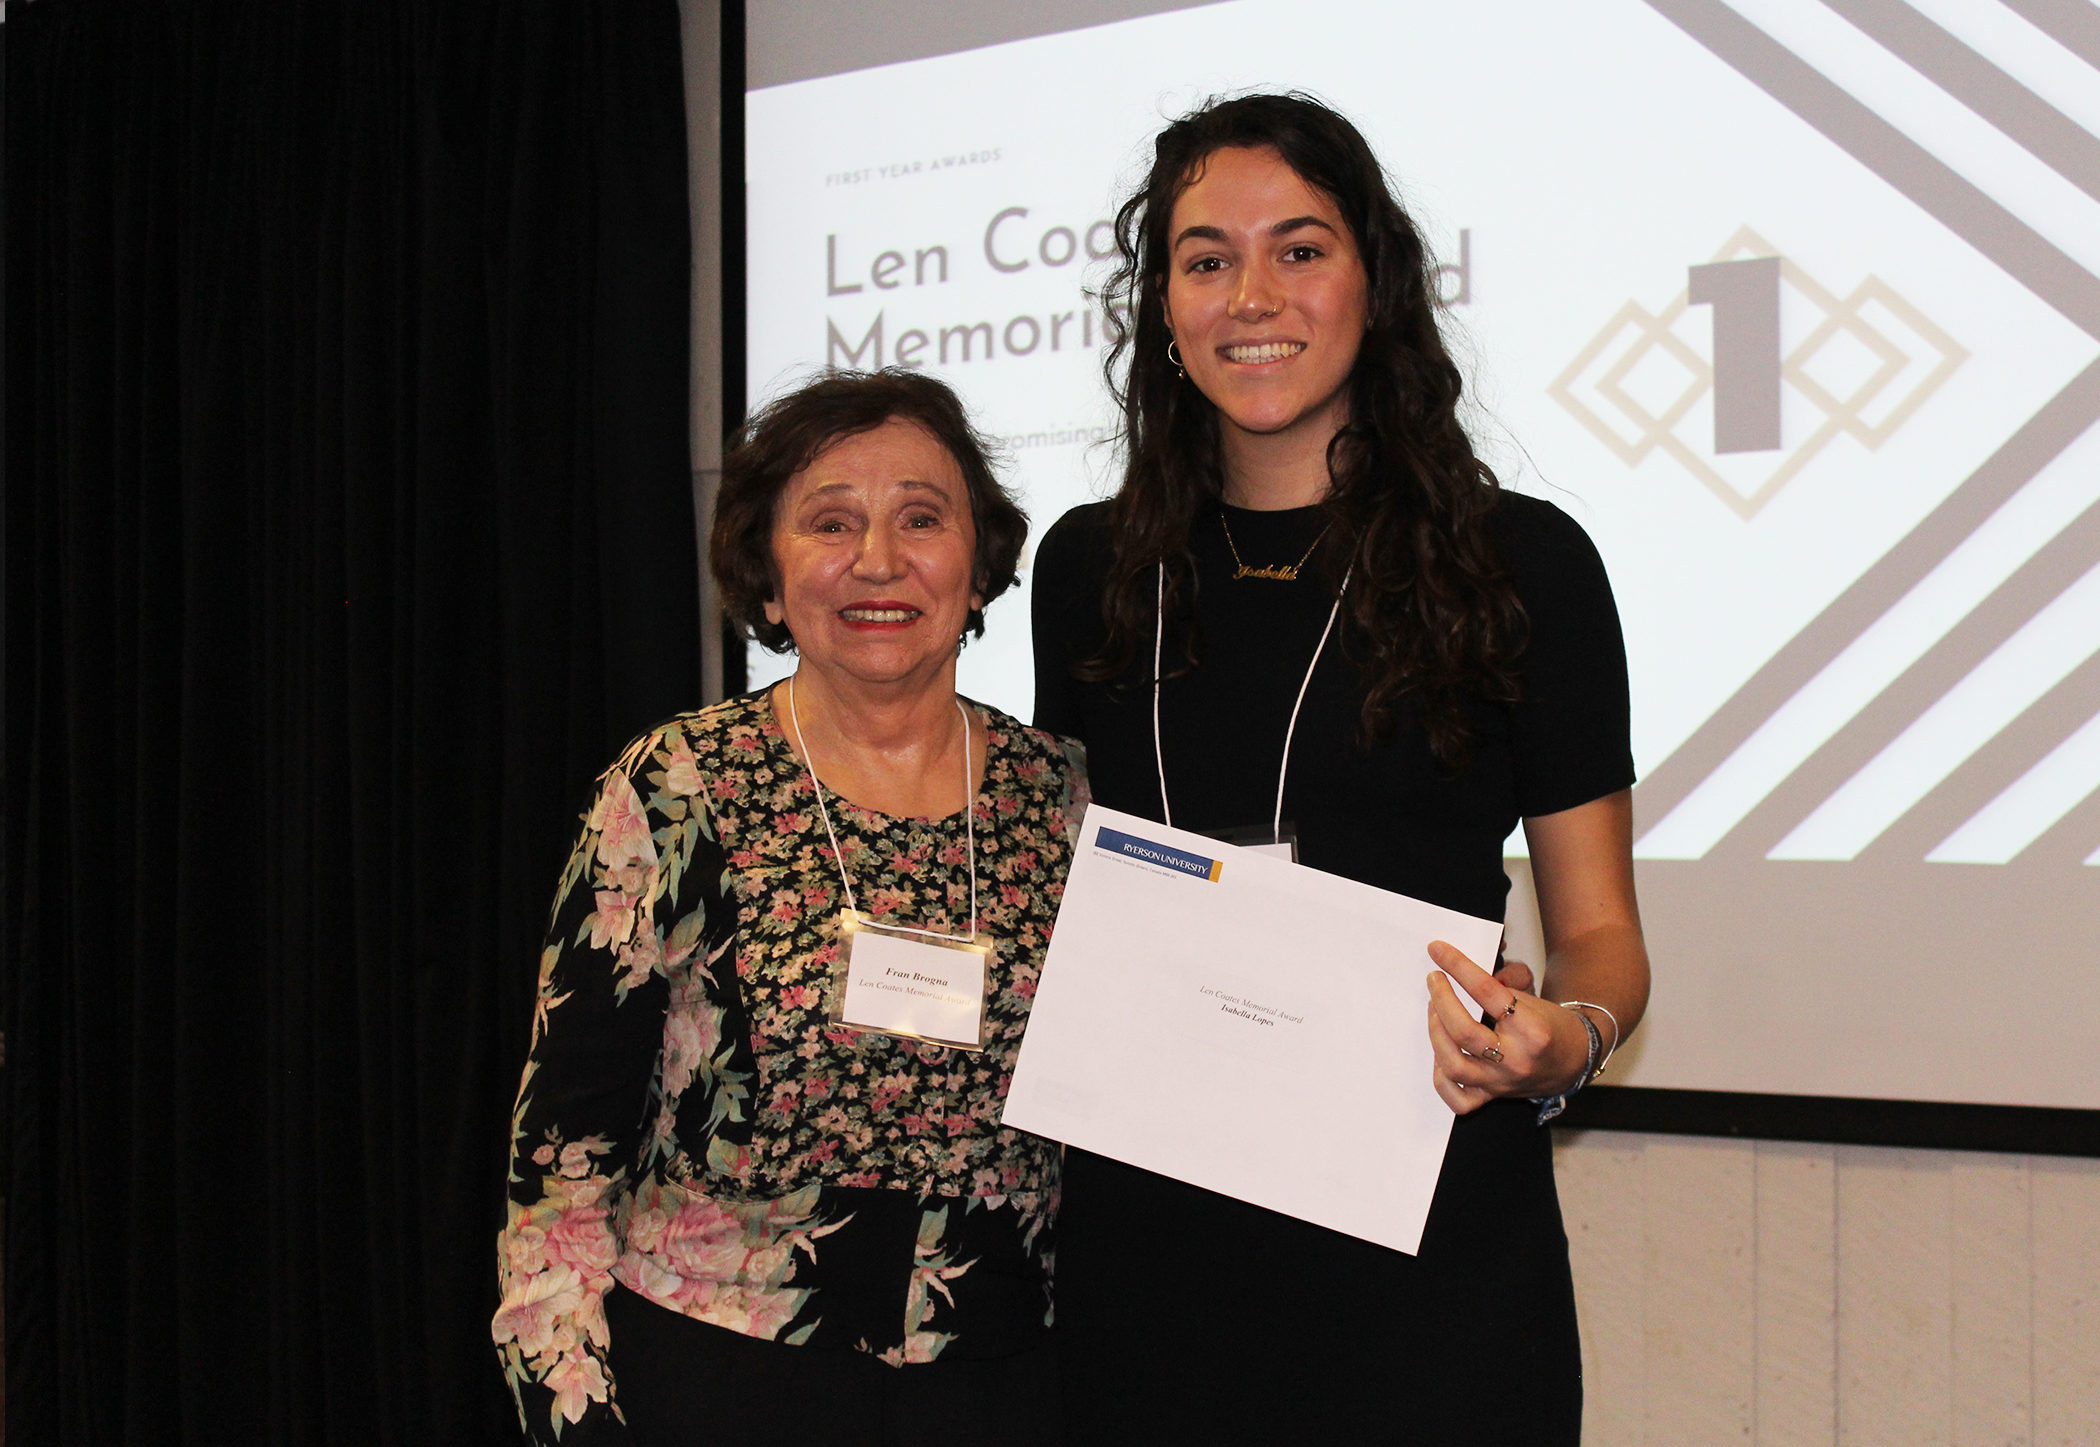 Len Coates Memorial Award presenter Fran Brogna with recipient Isabella Lopes.